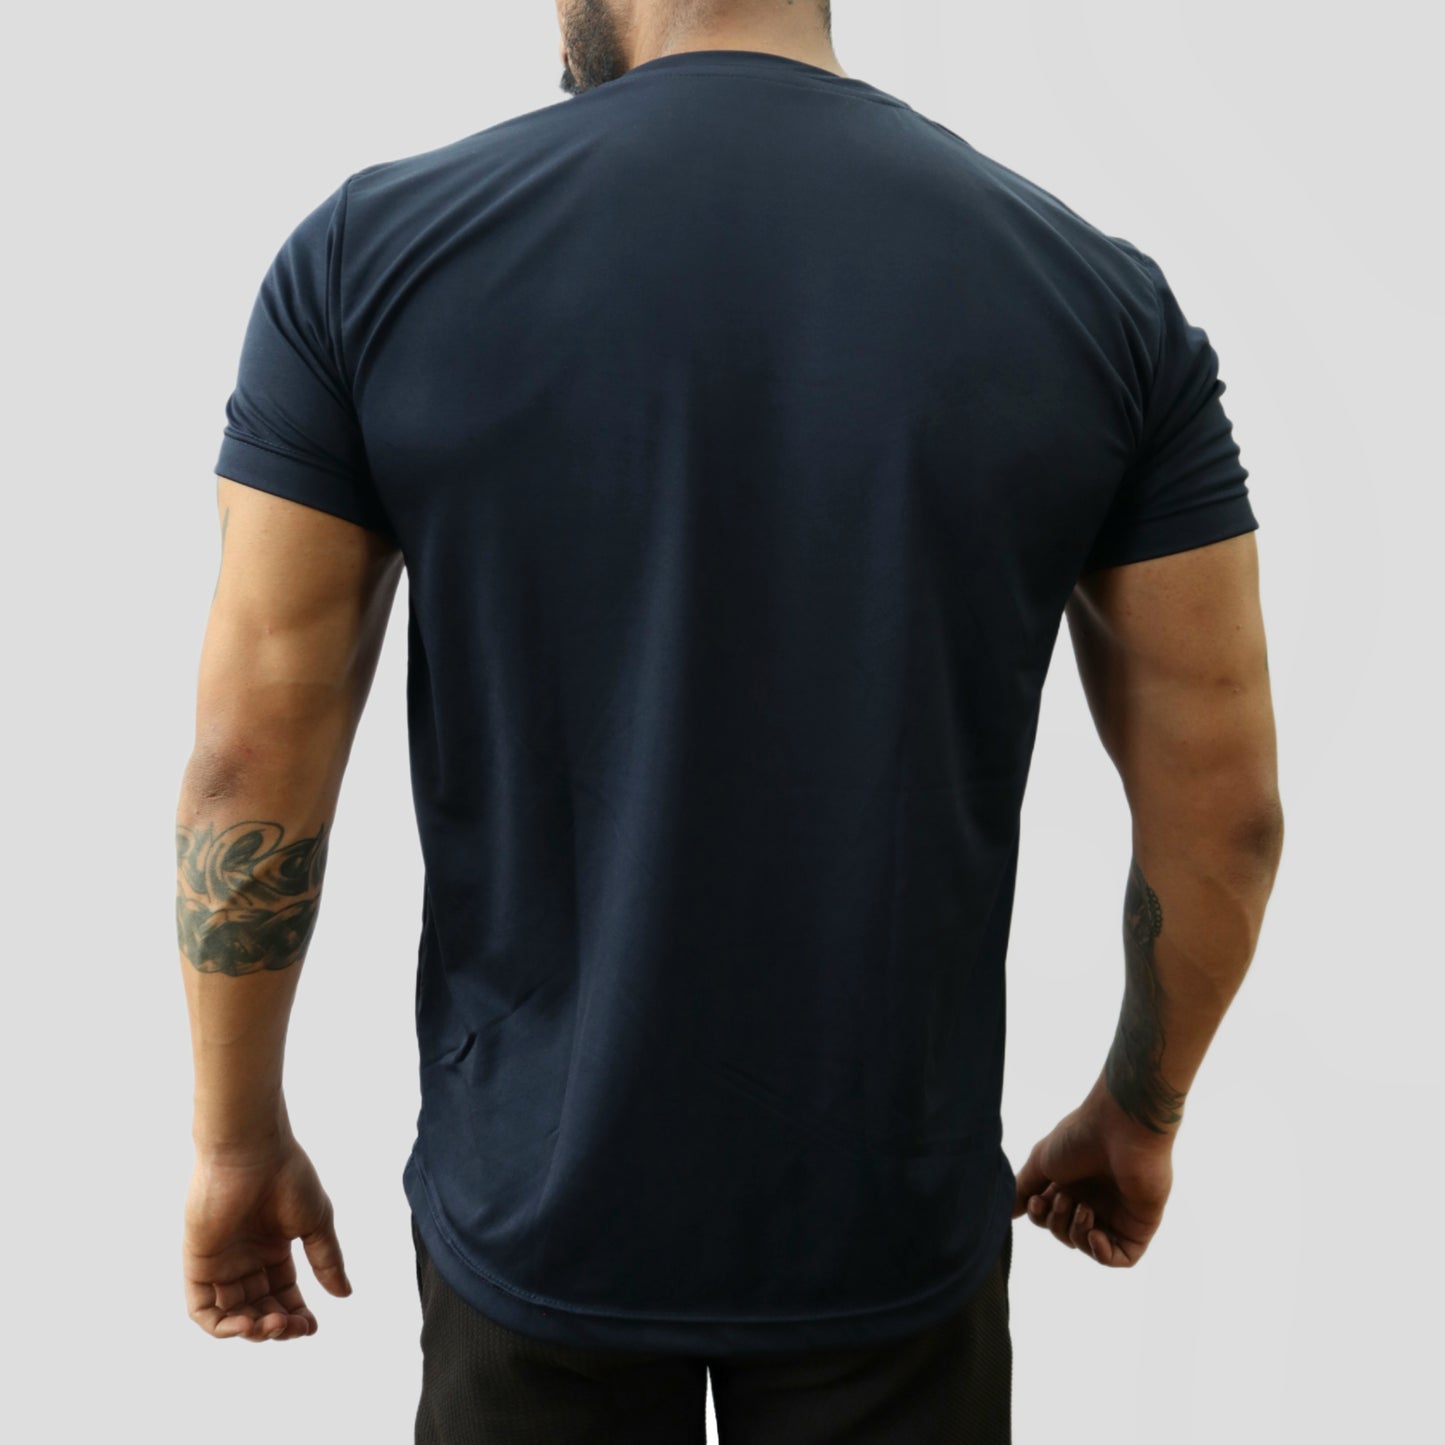 21 Navy Blue Dry fit Tshirt